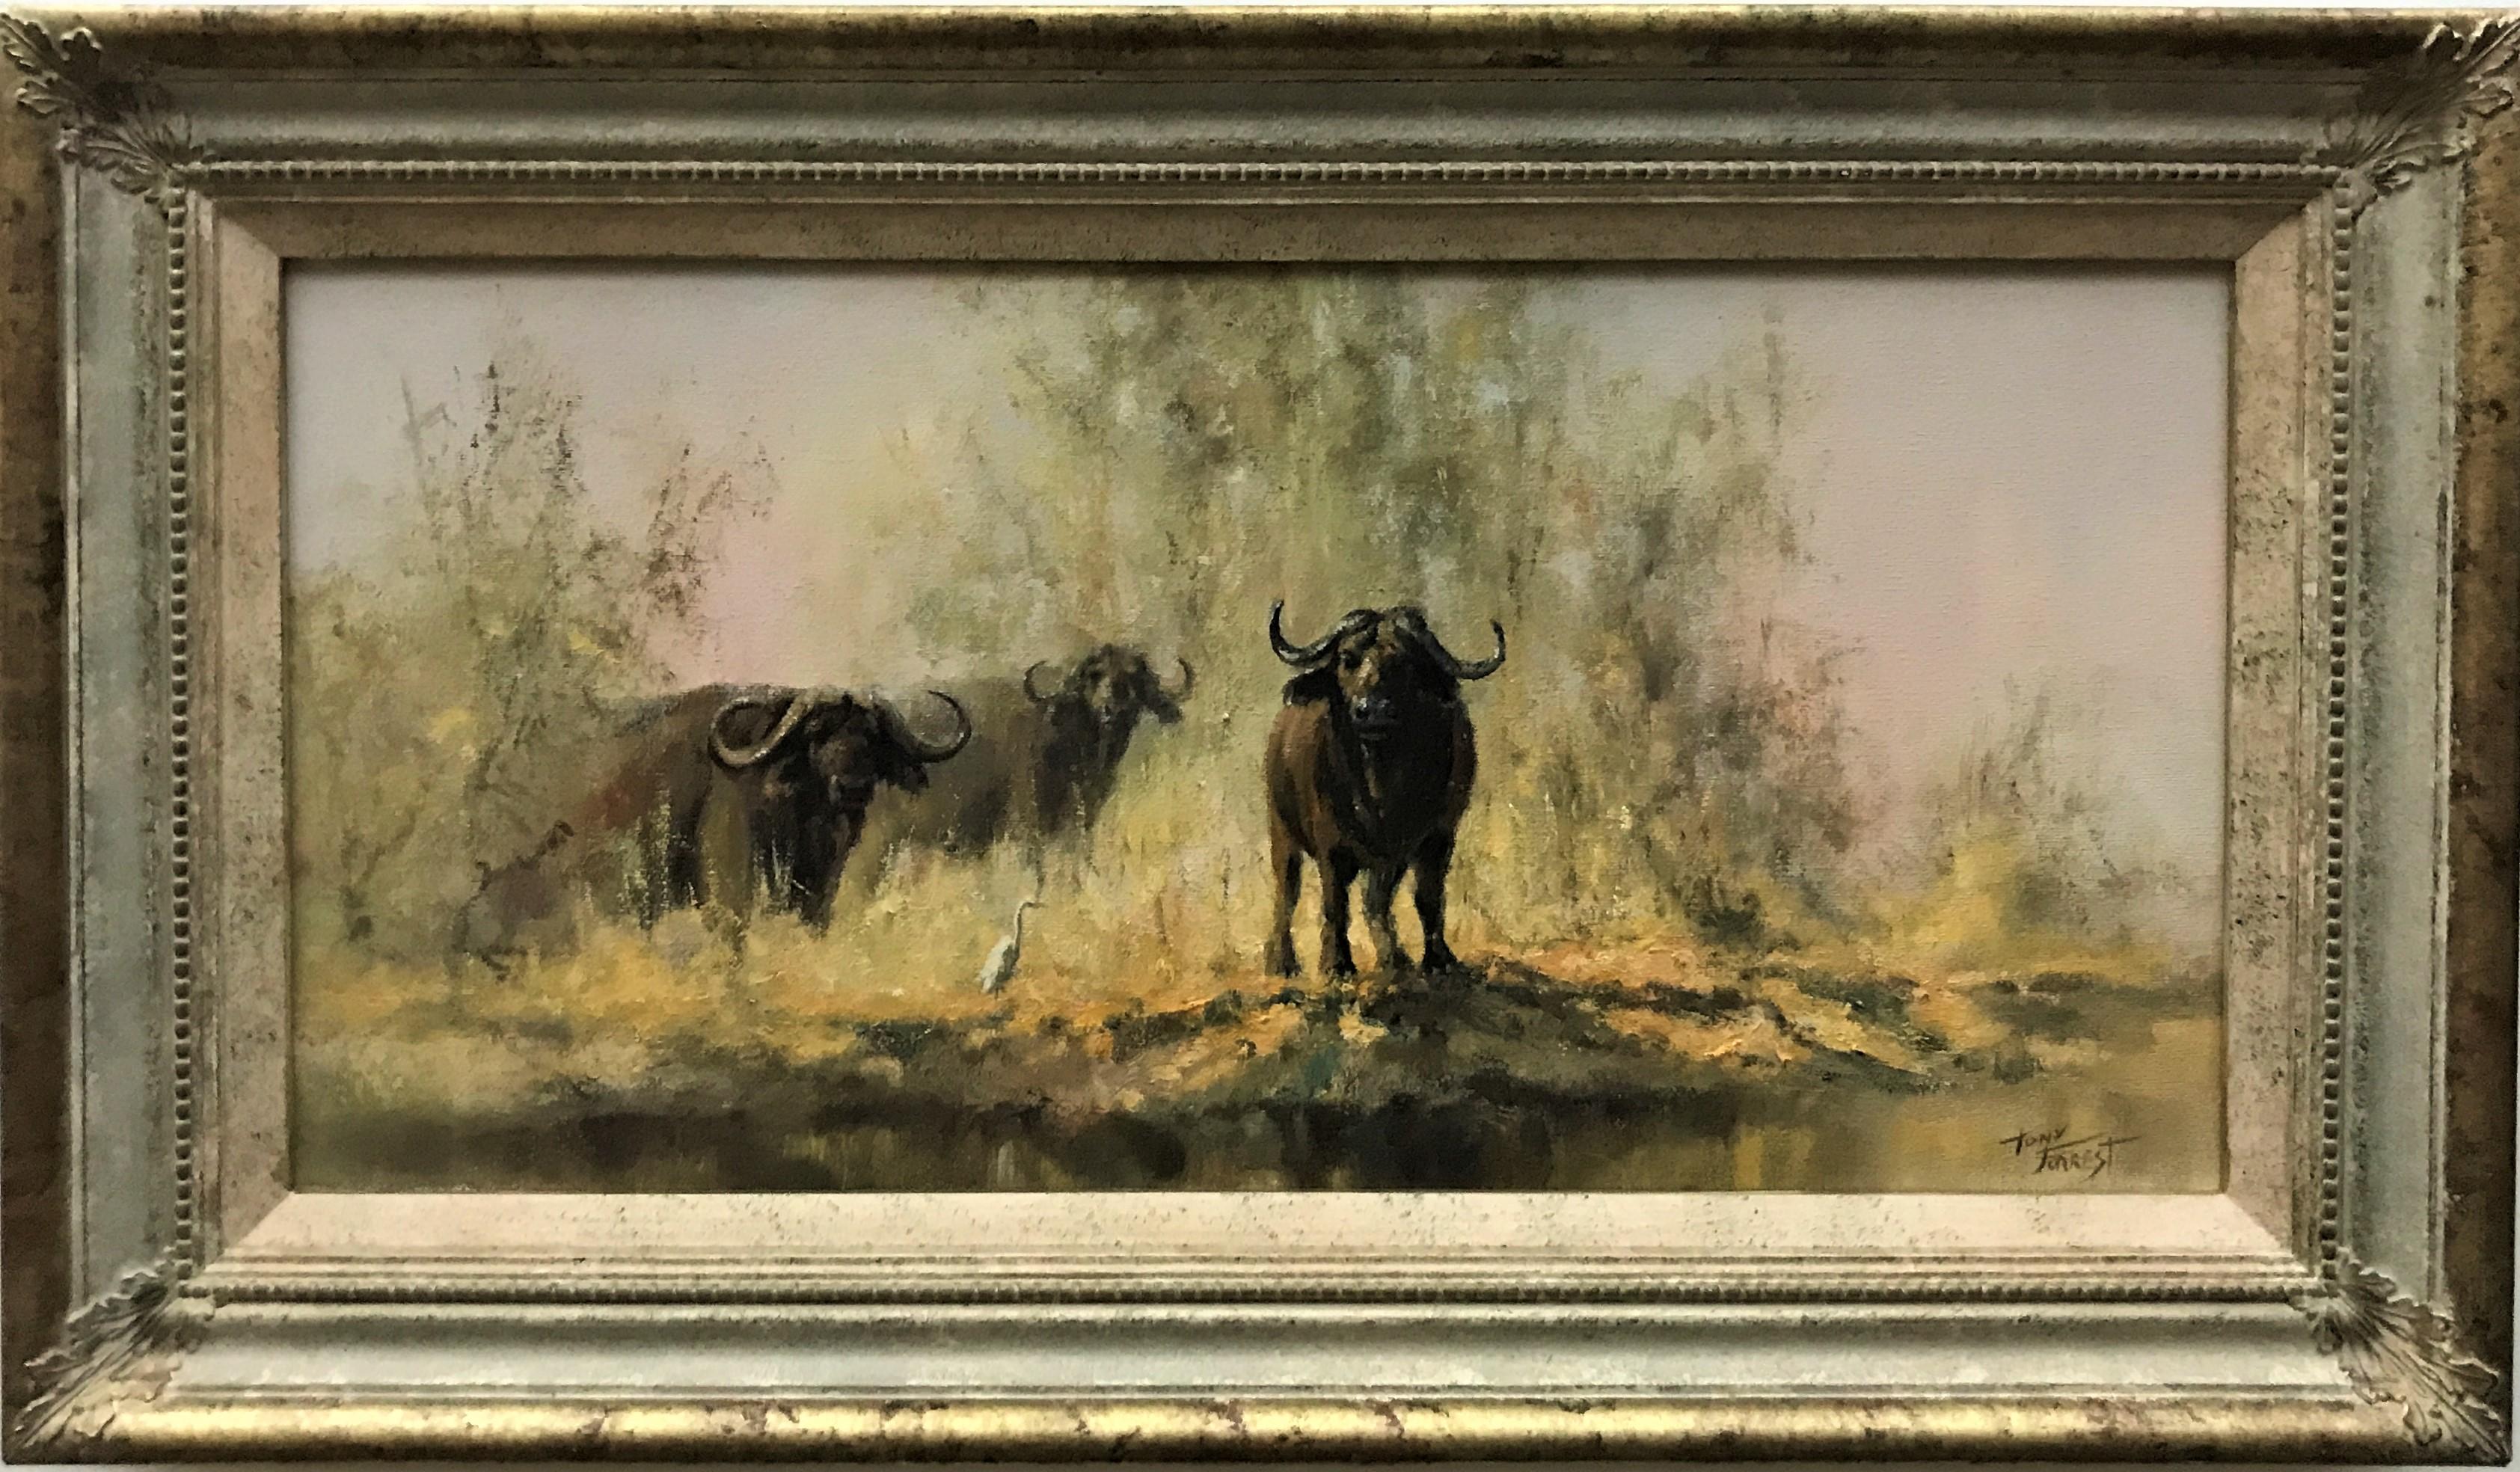 Cape Buffalo in Savannah, original oil on canvas, contemporary British artist